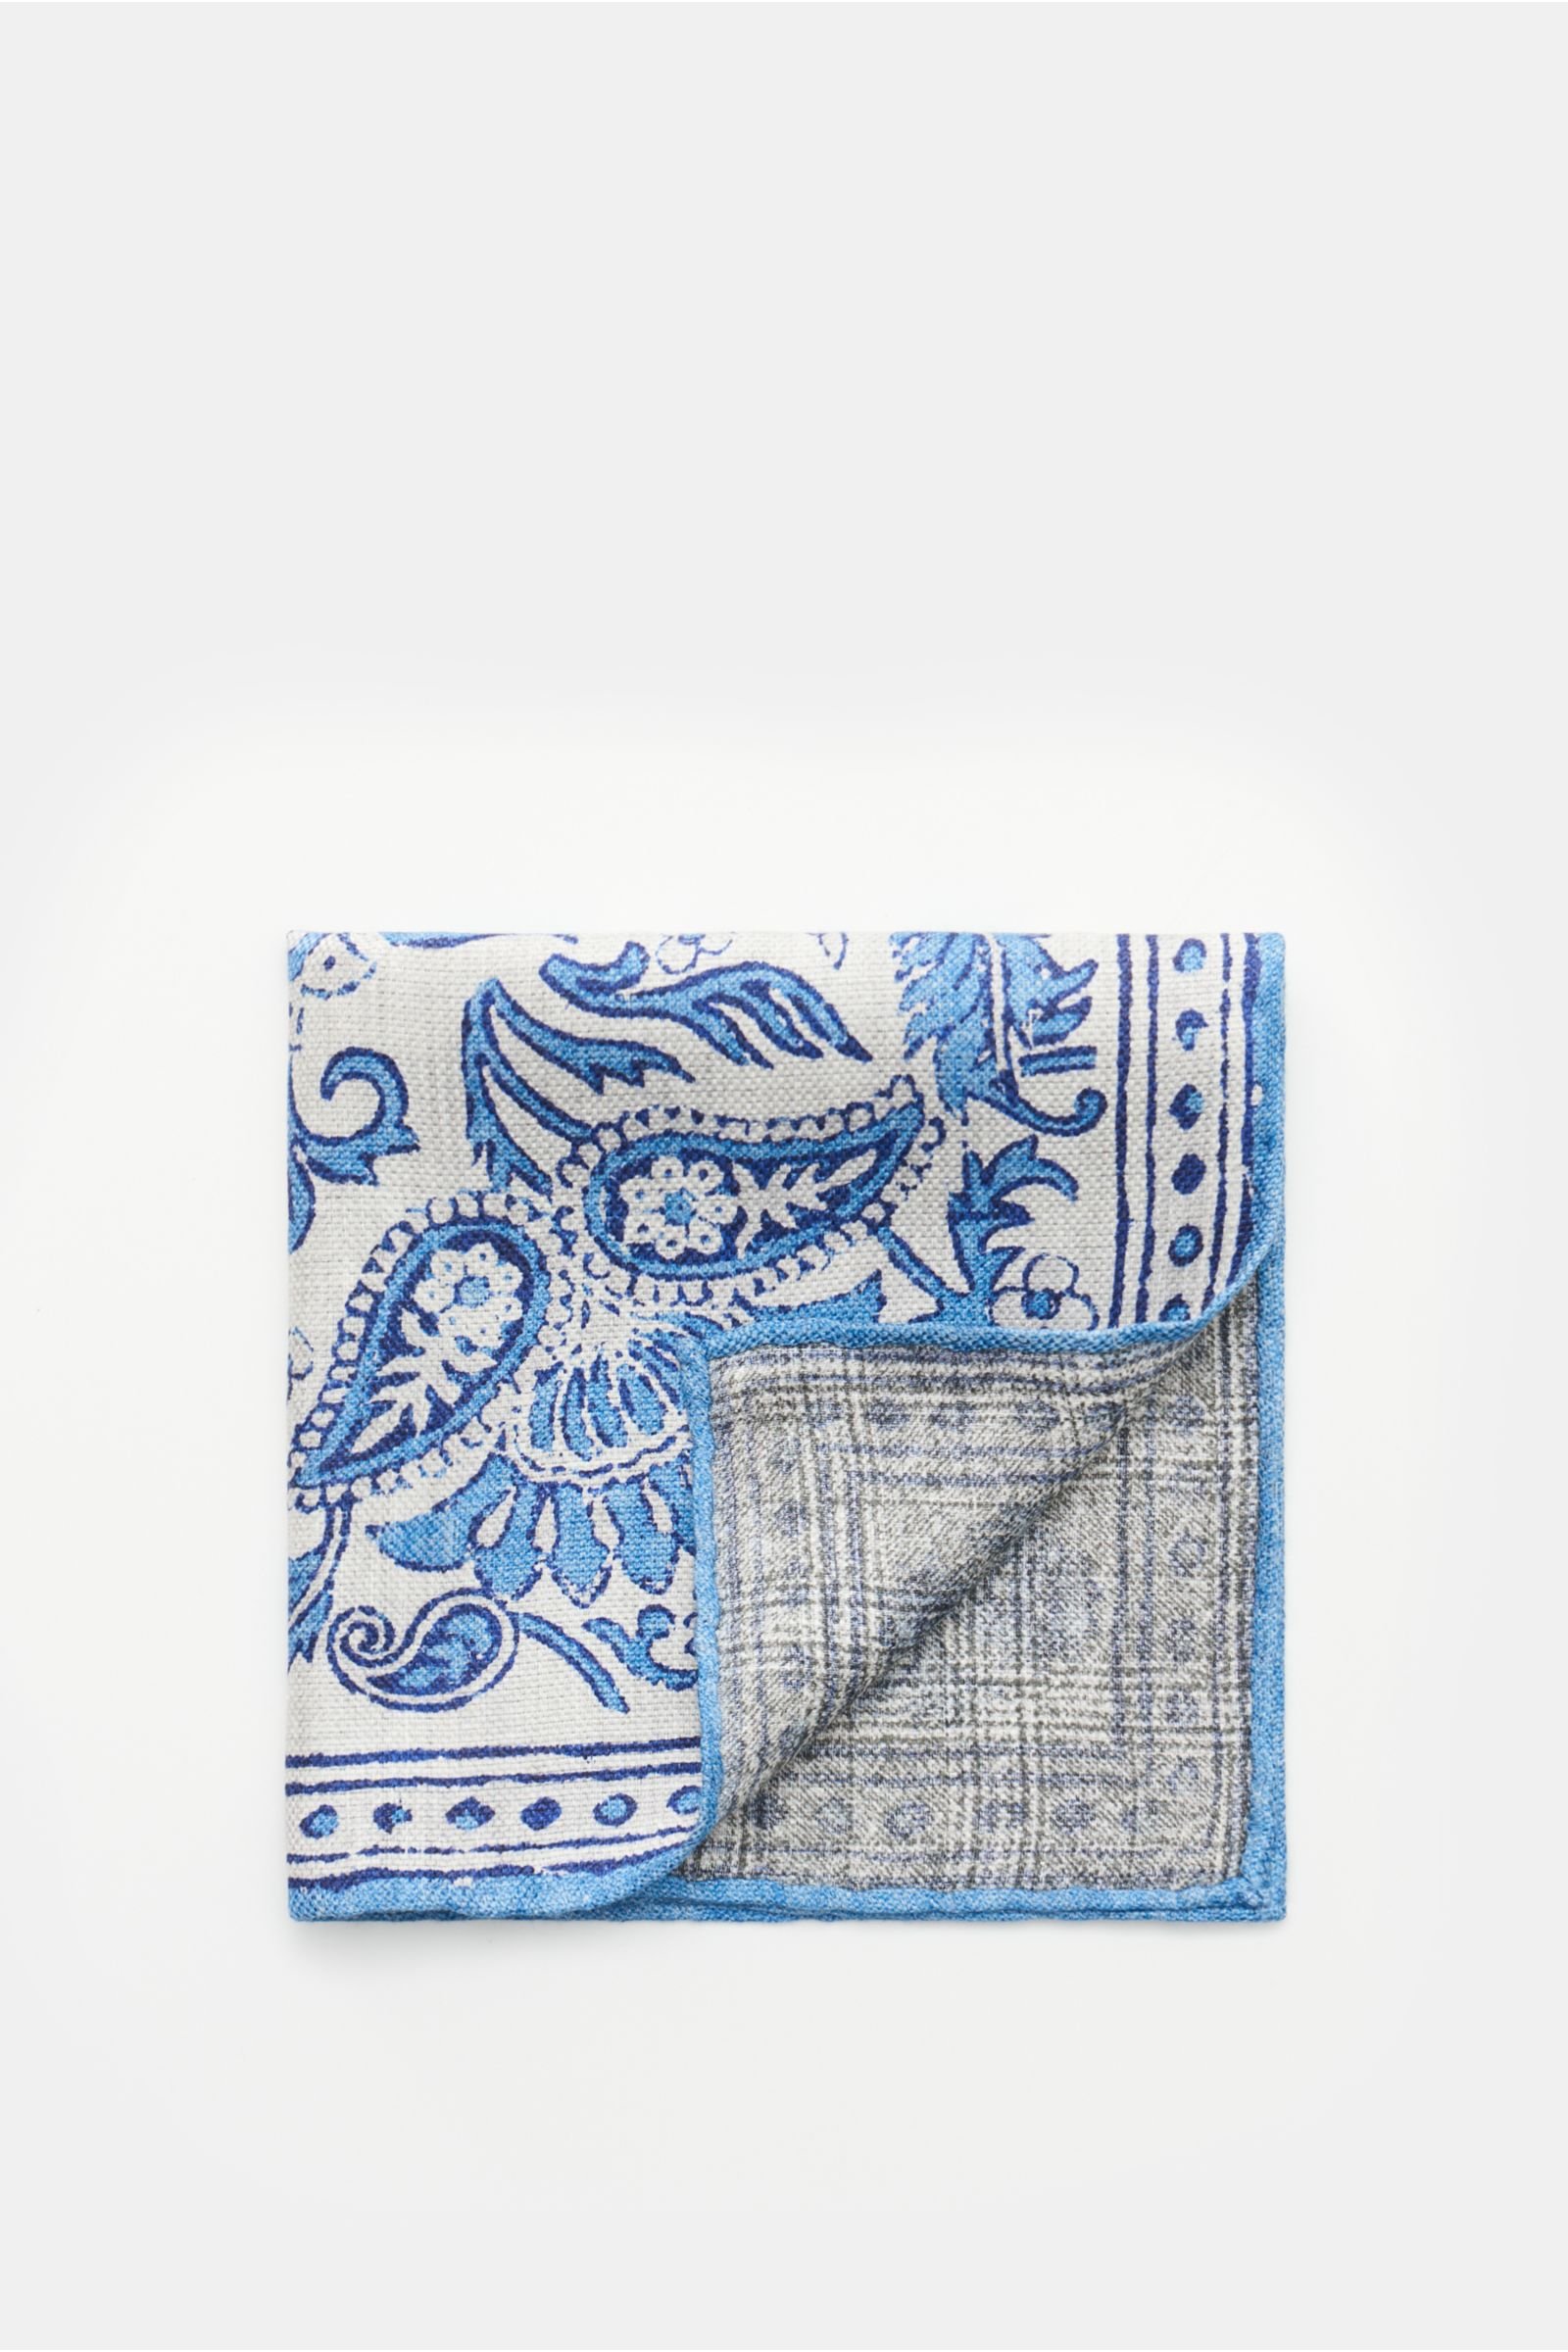 Pocket square off-white/blue/grey patterned